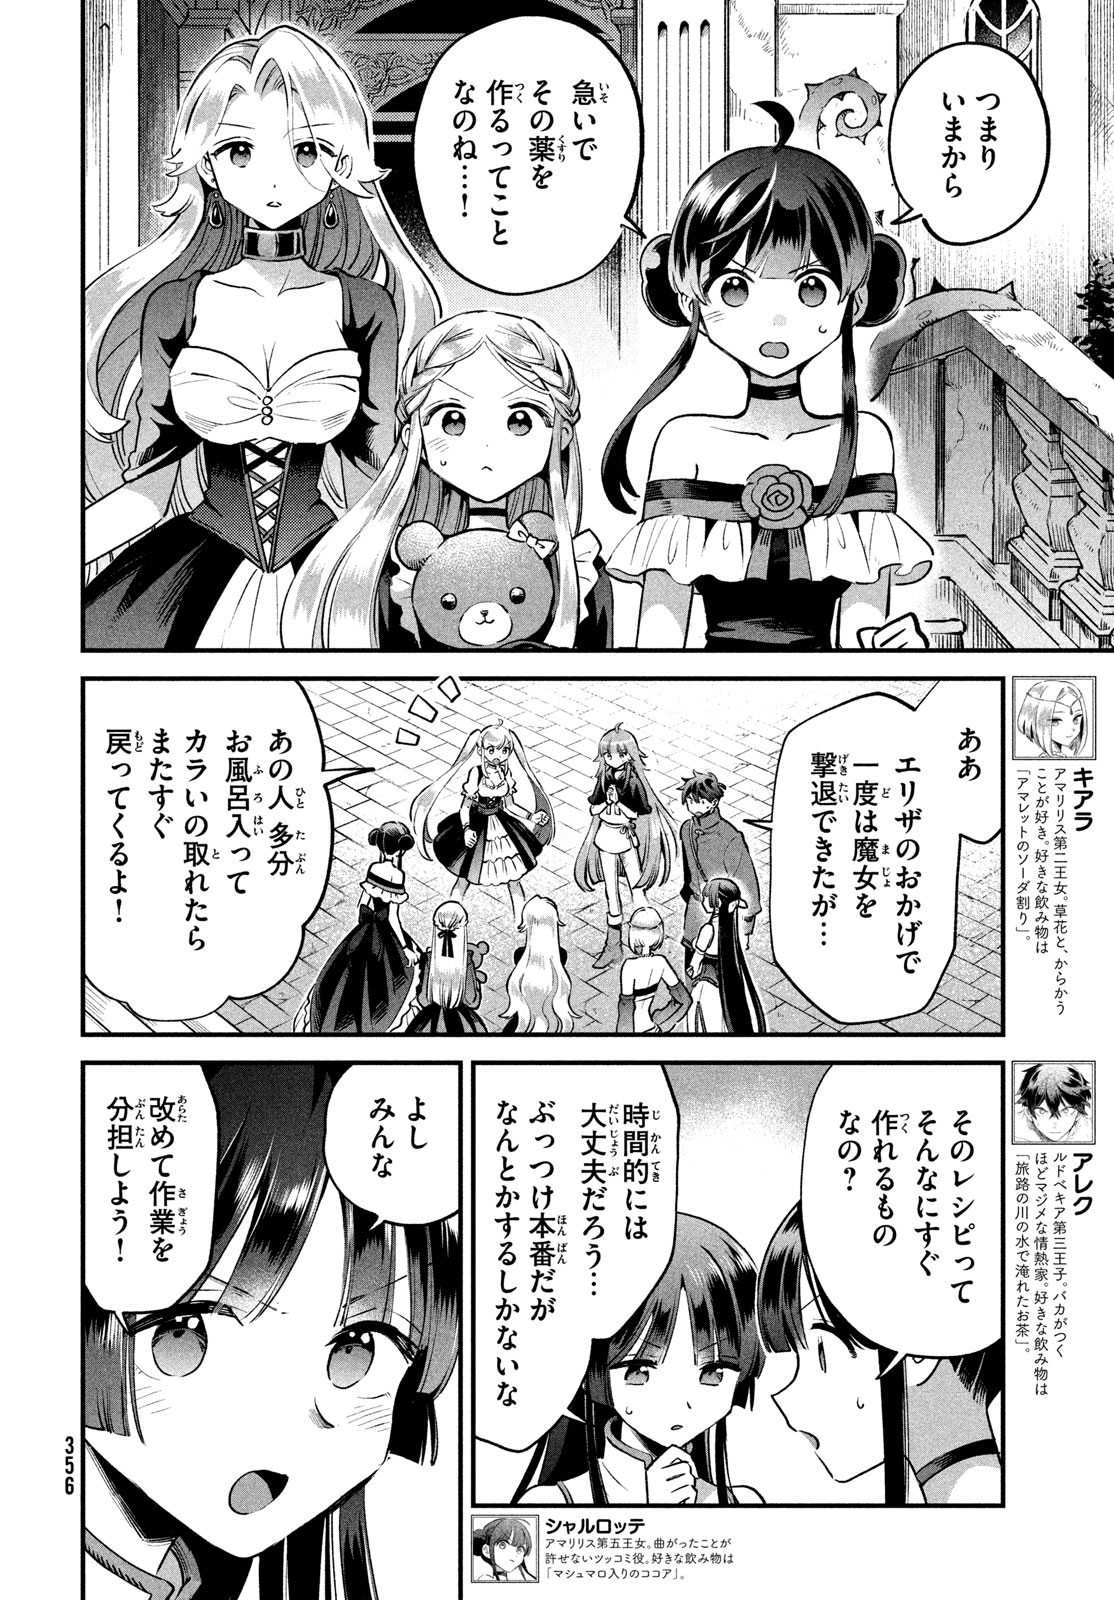 7-nin no Nemuri Hime - Chapter 45 - Page 2